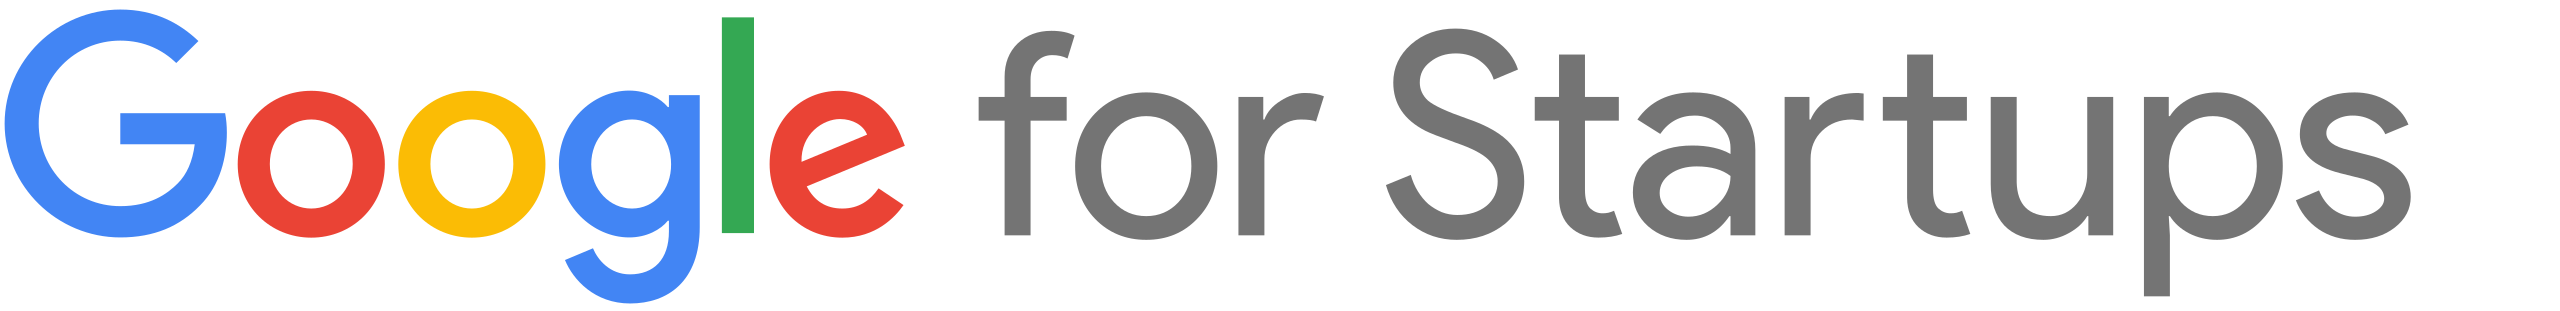 File:Google for Startups logo.svg - Wikipedia